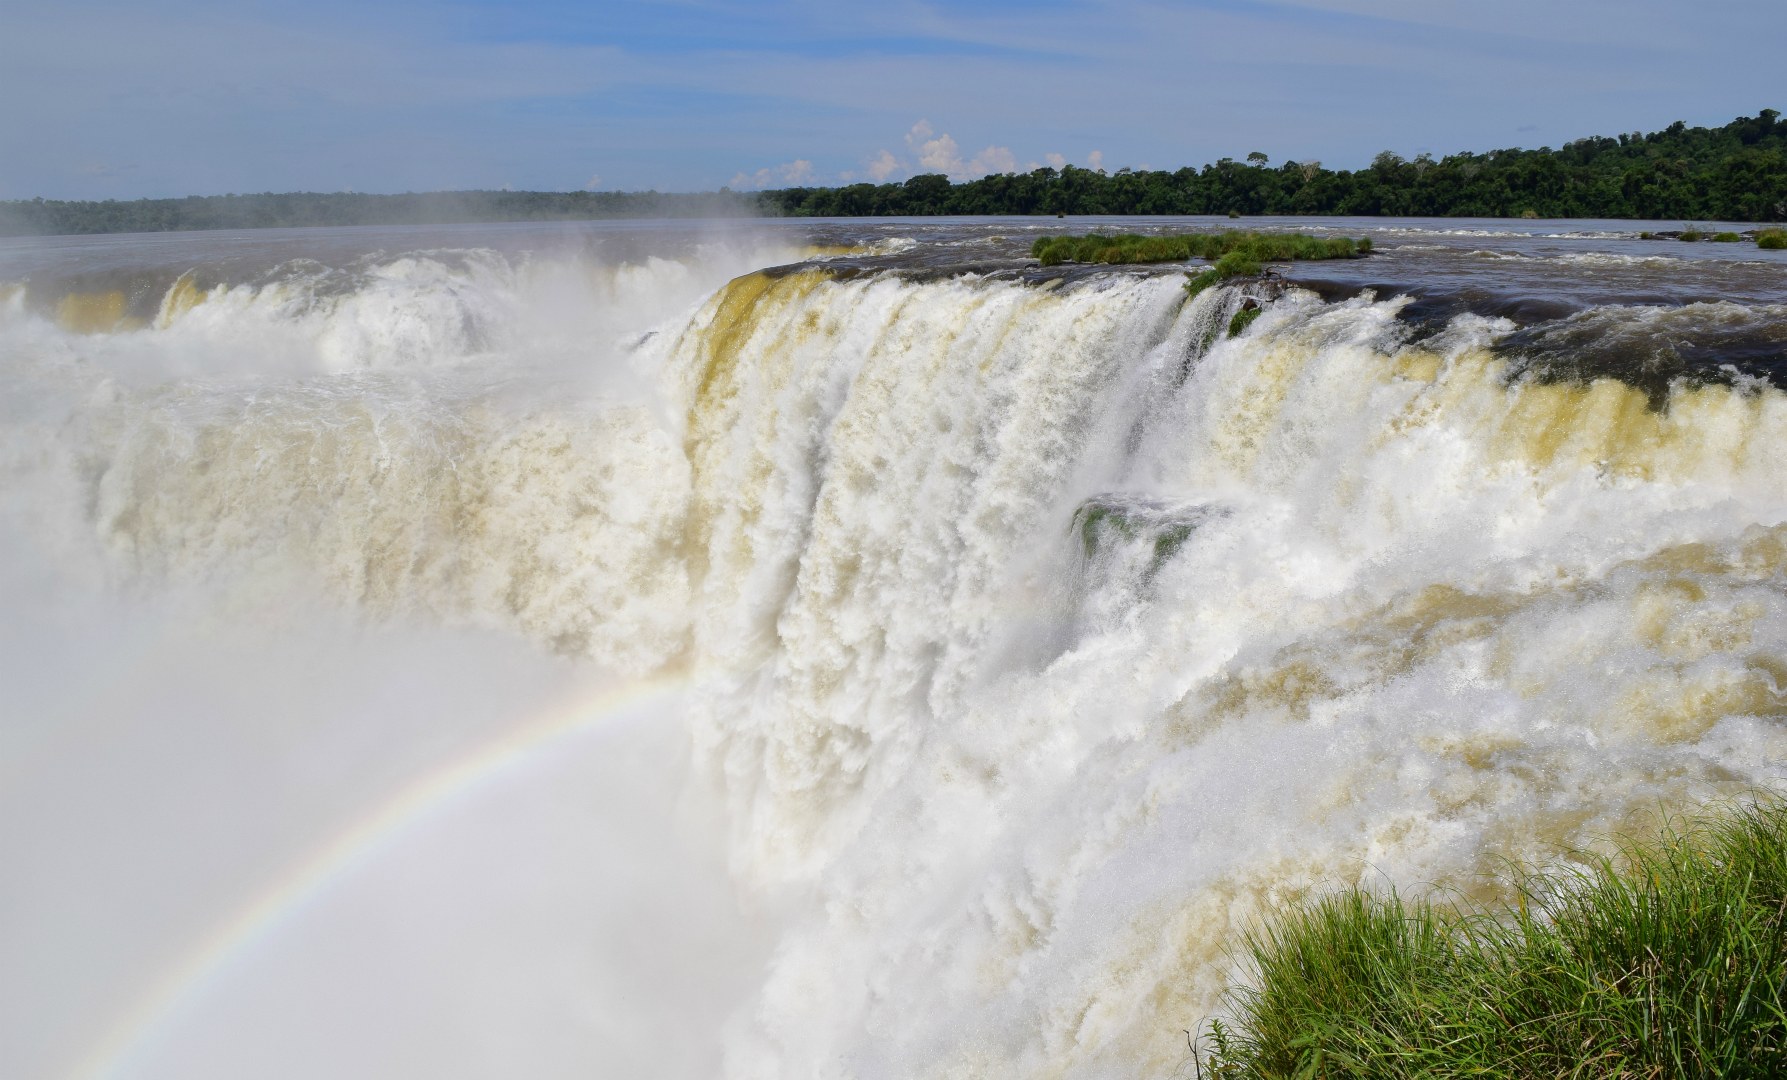 Garganta del Diablo, Iguazu Falls